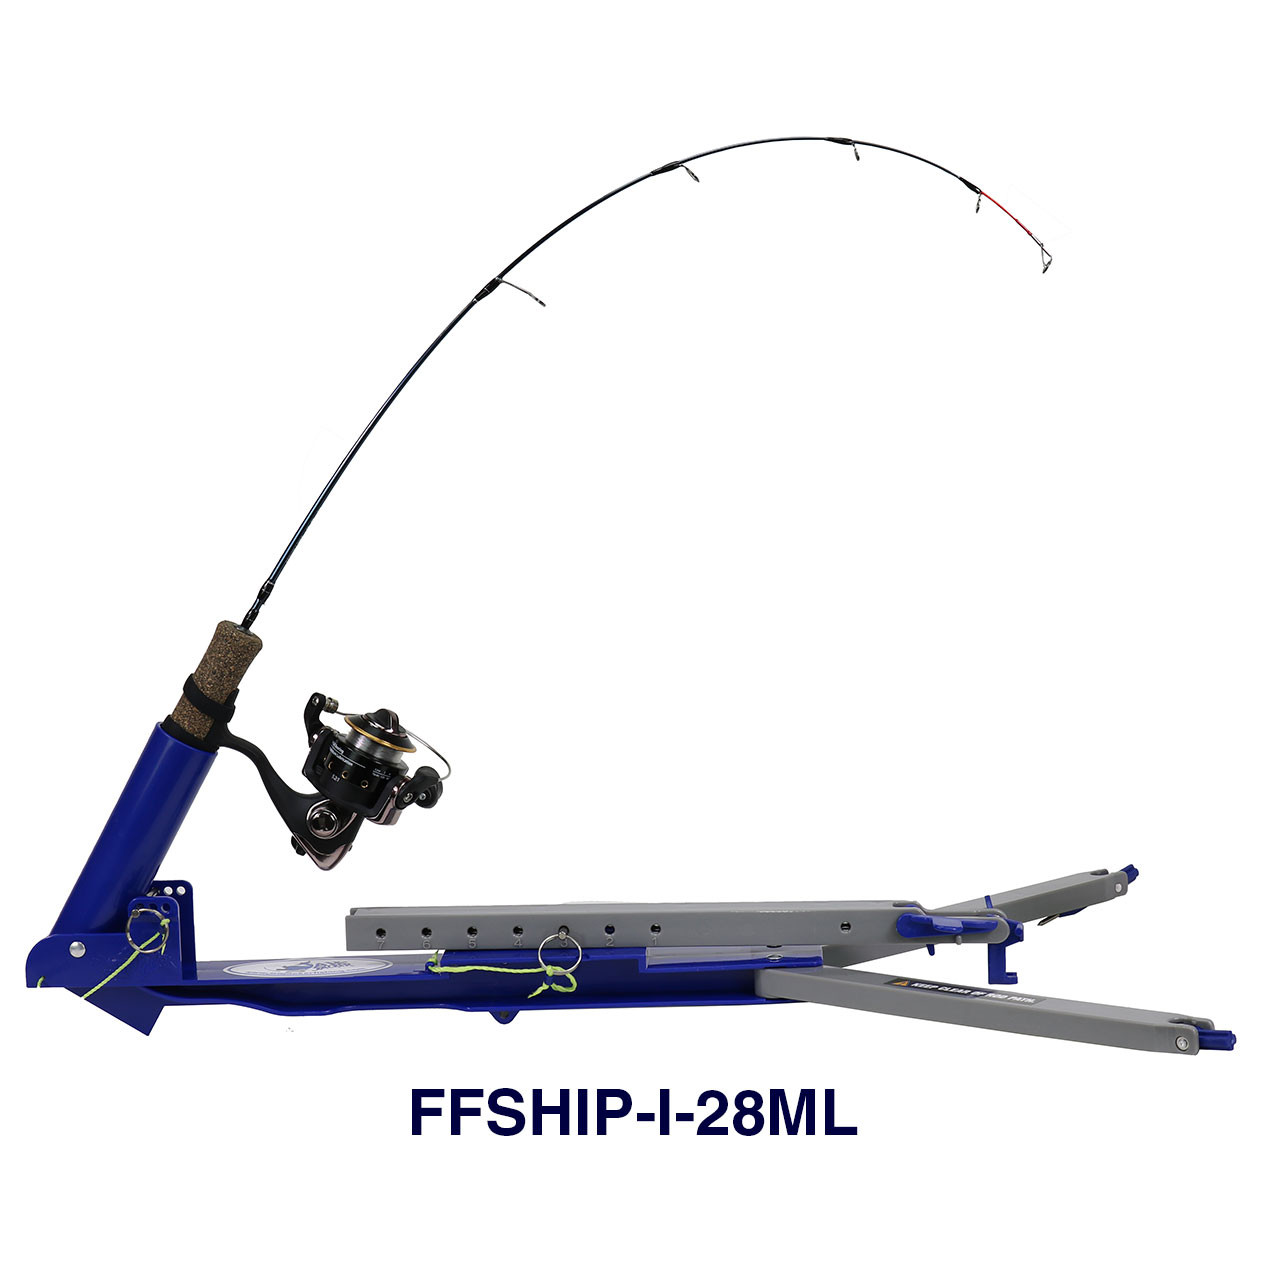 FishUSA Flagship Ice Rod - FishUSA